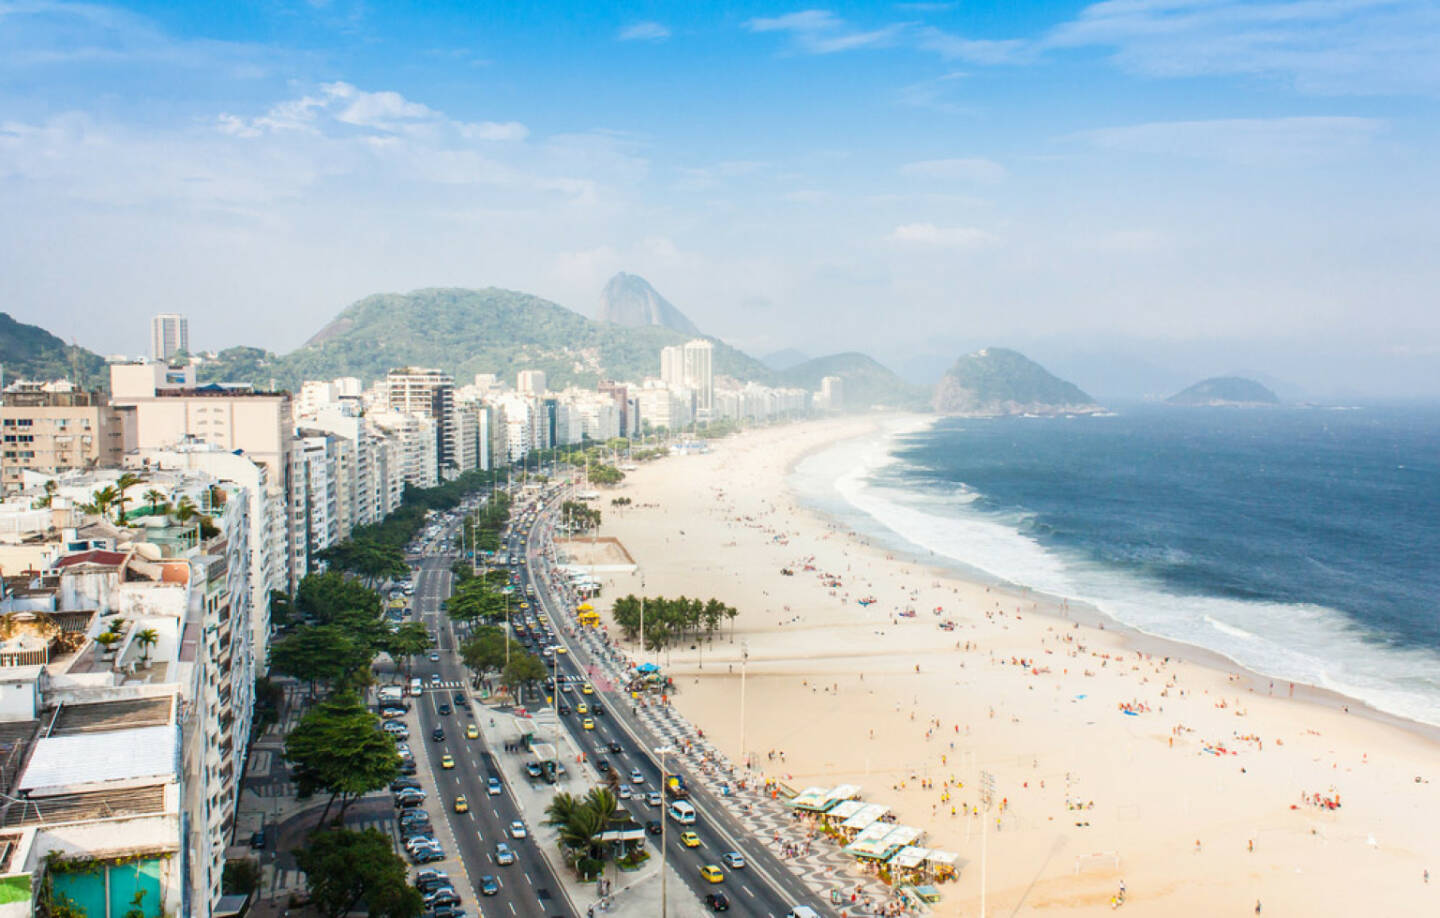 Rio de Janeiro, Brasilien, Copacabana, Strand, Meer, http://www.shutterstock.com/de/pic-129418865/stock-photo-brazil-rio-de-janeiro-the-famous-beach-of-copacabana.html